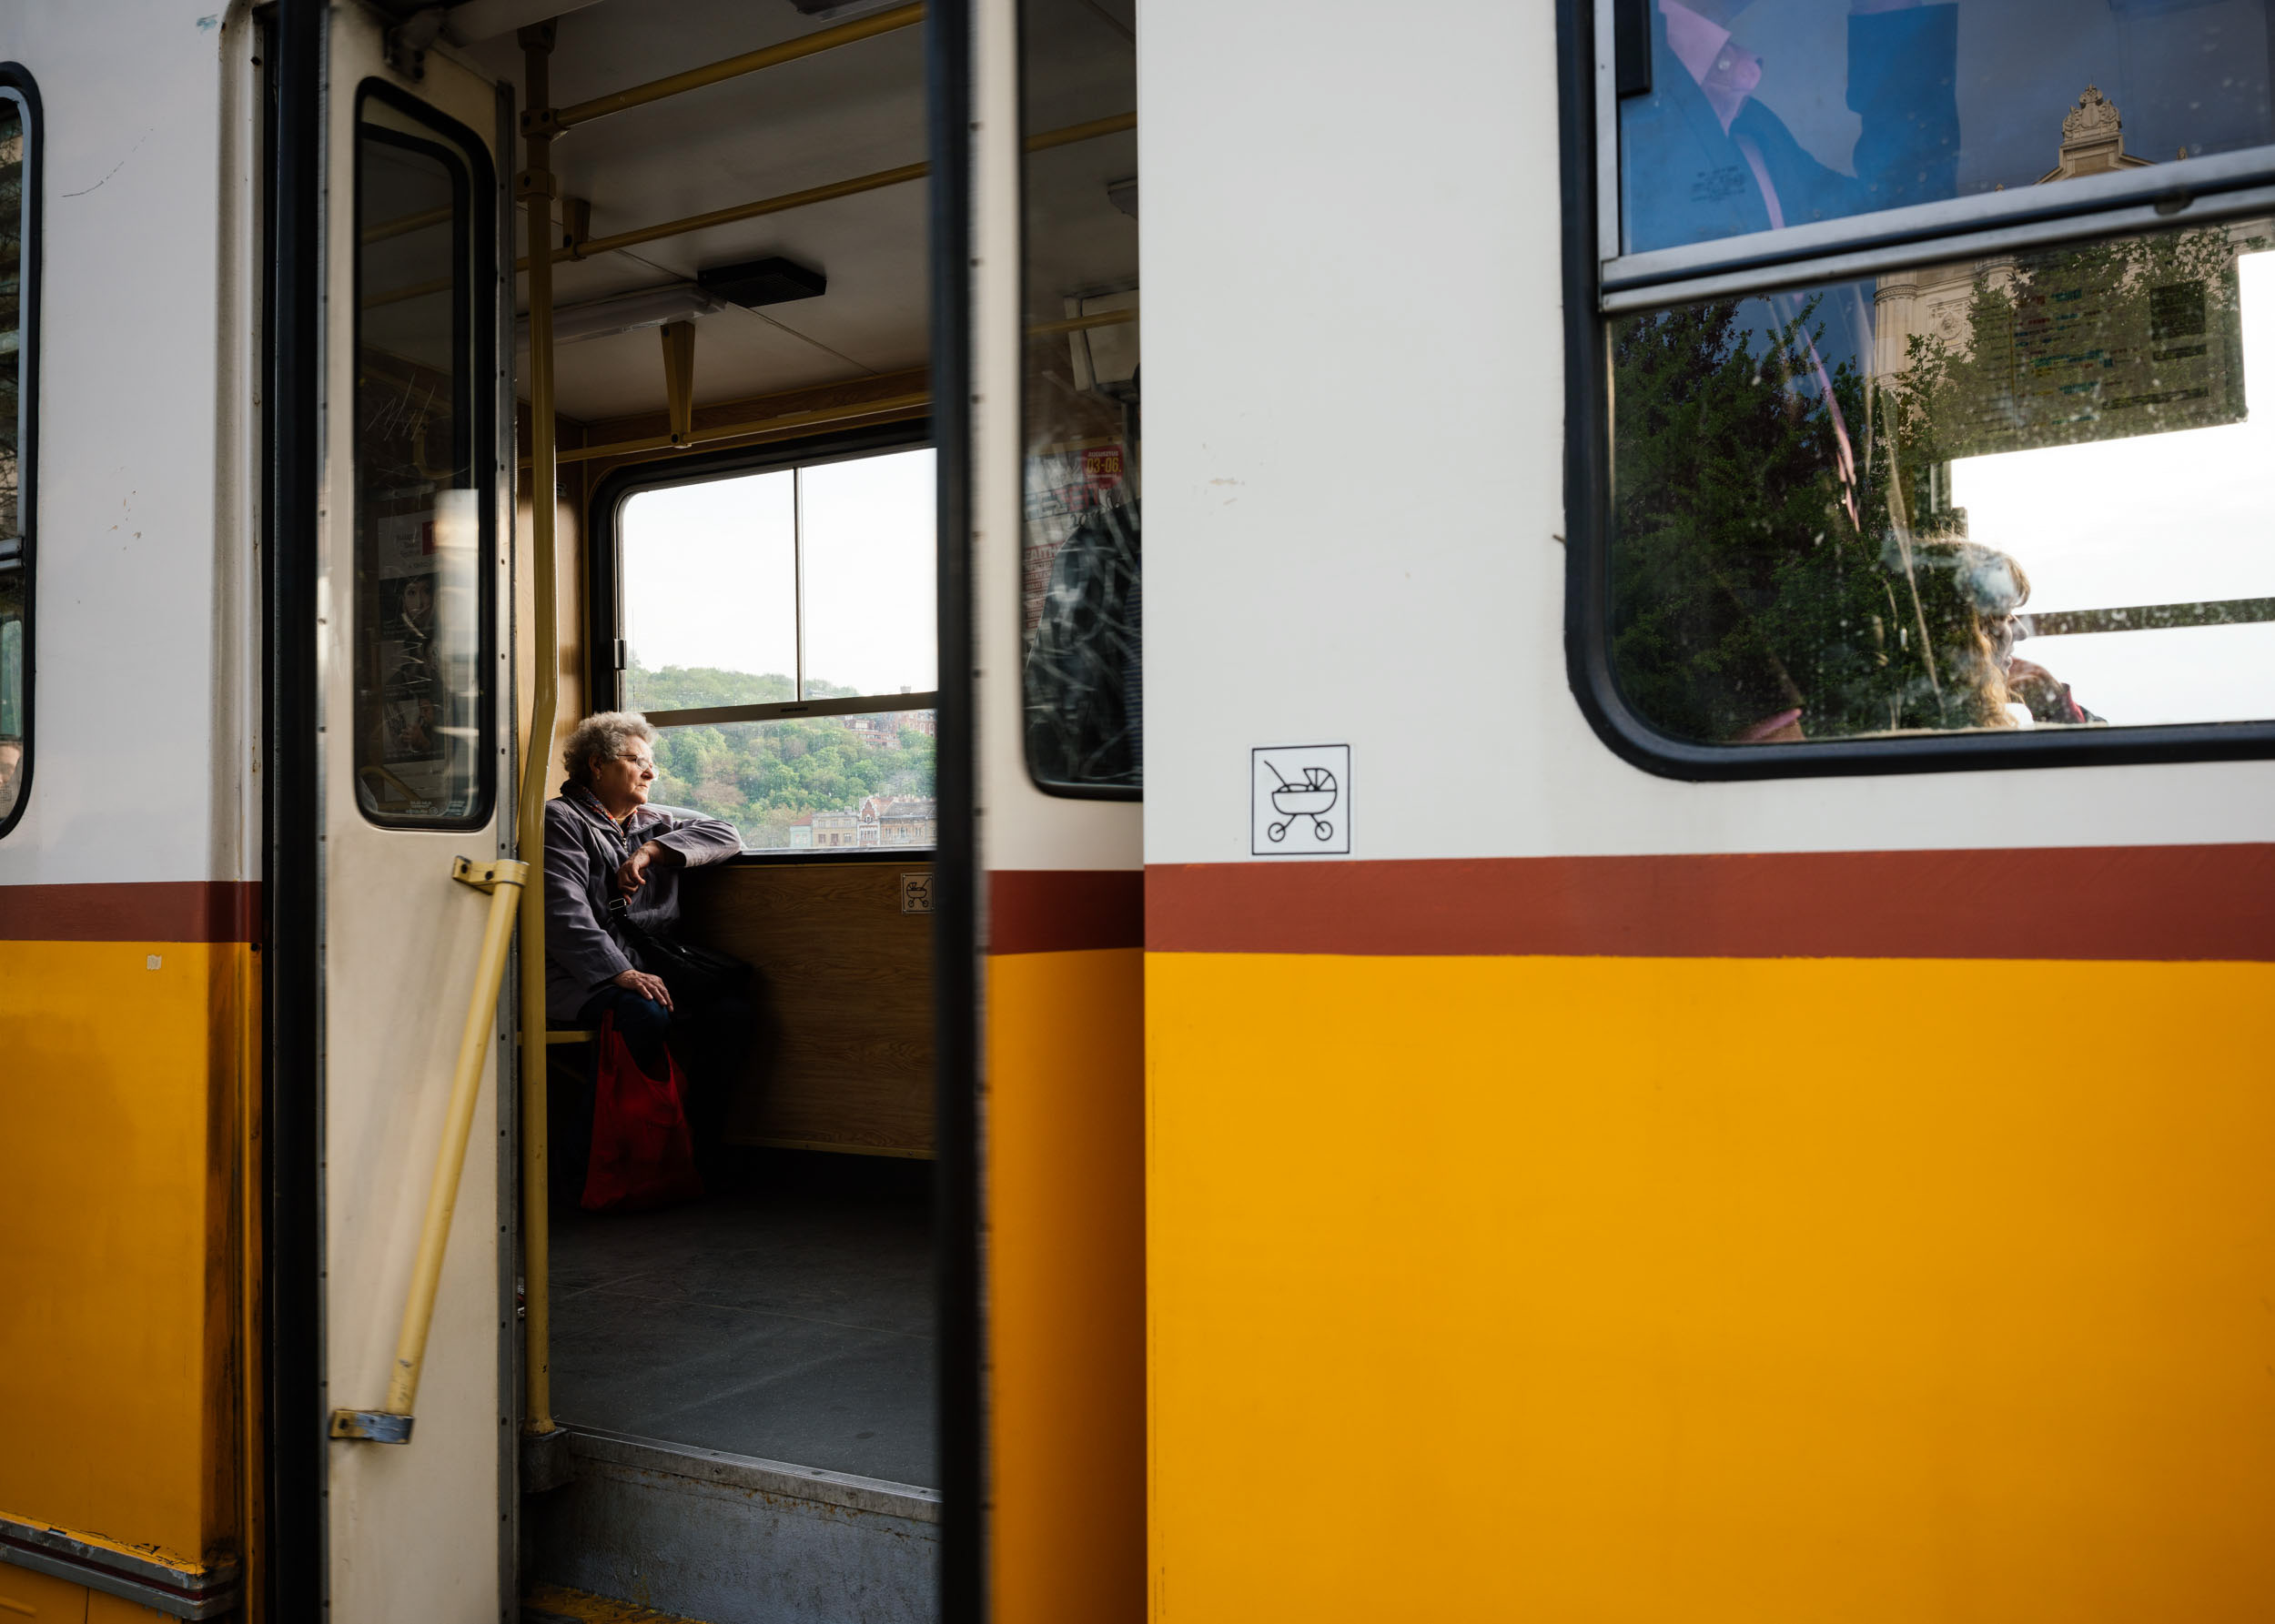 tram-transport-public-doorway-budapest-hungary